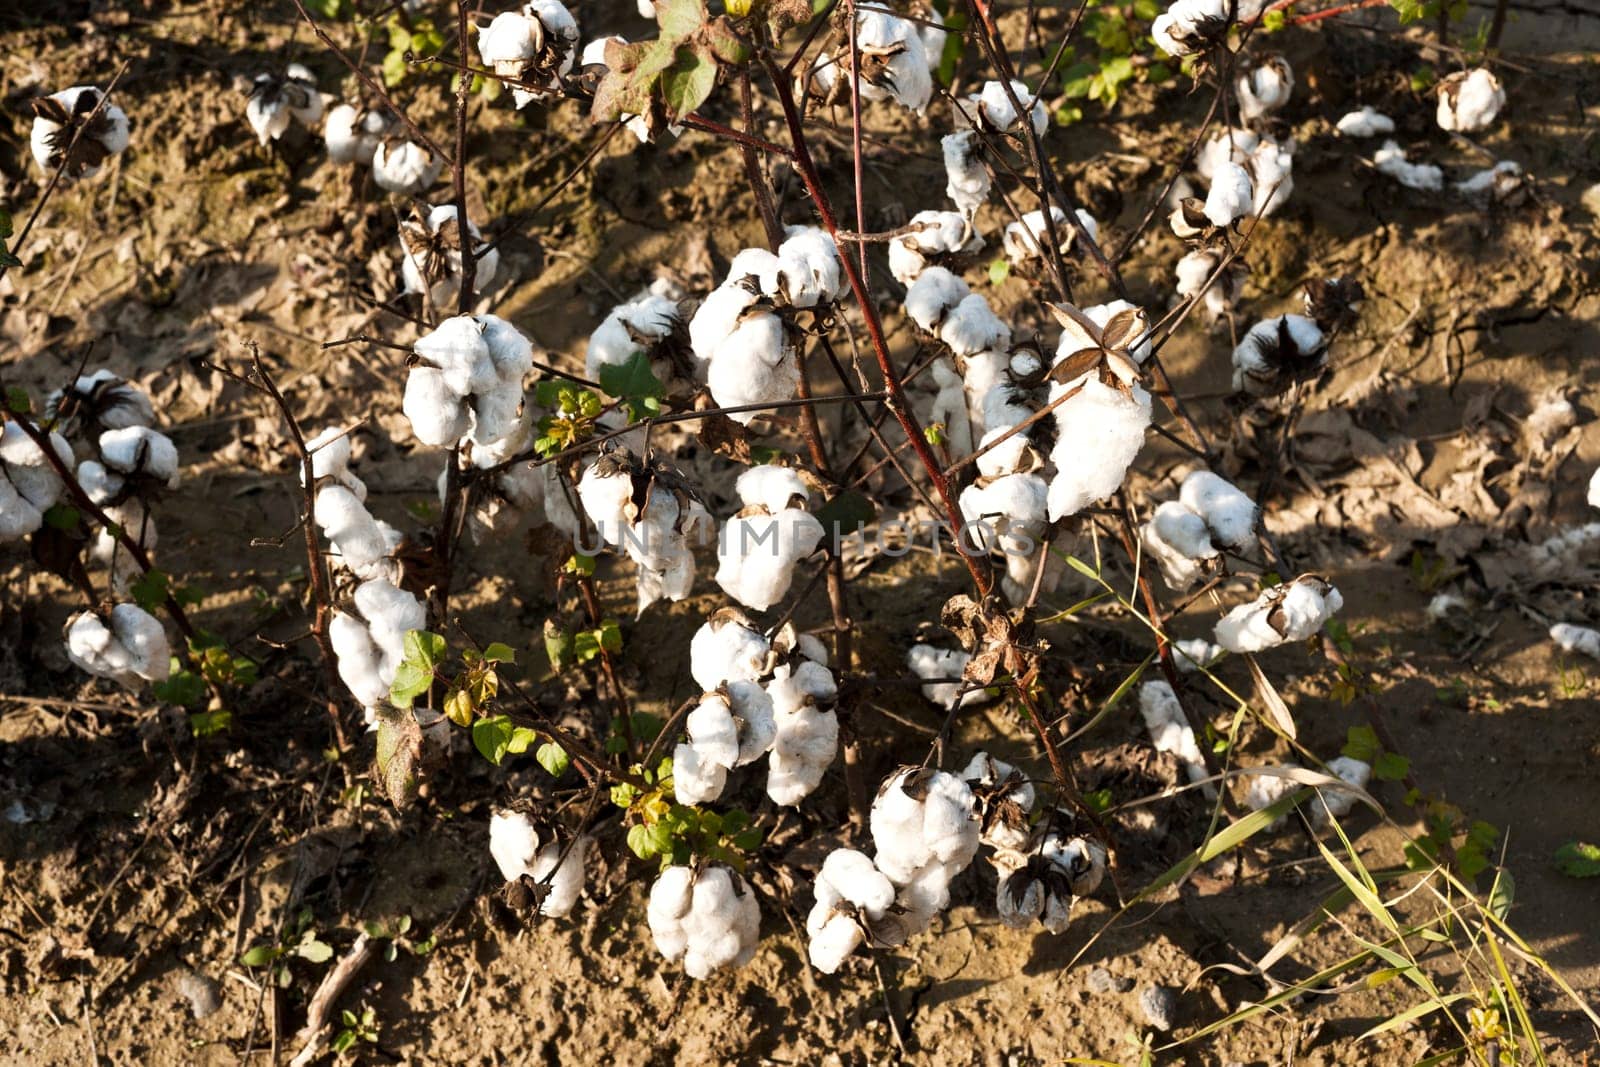 Cotton farm by emirkoo